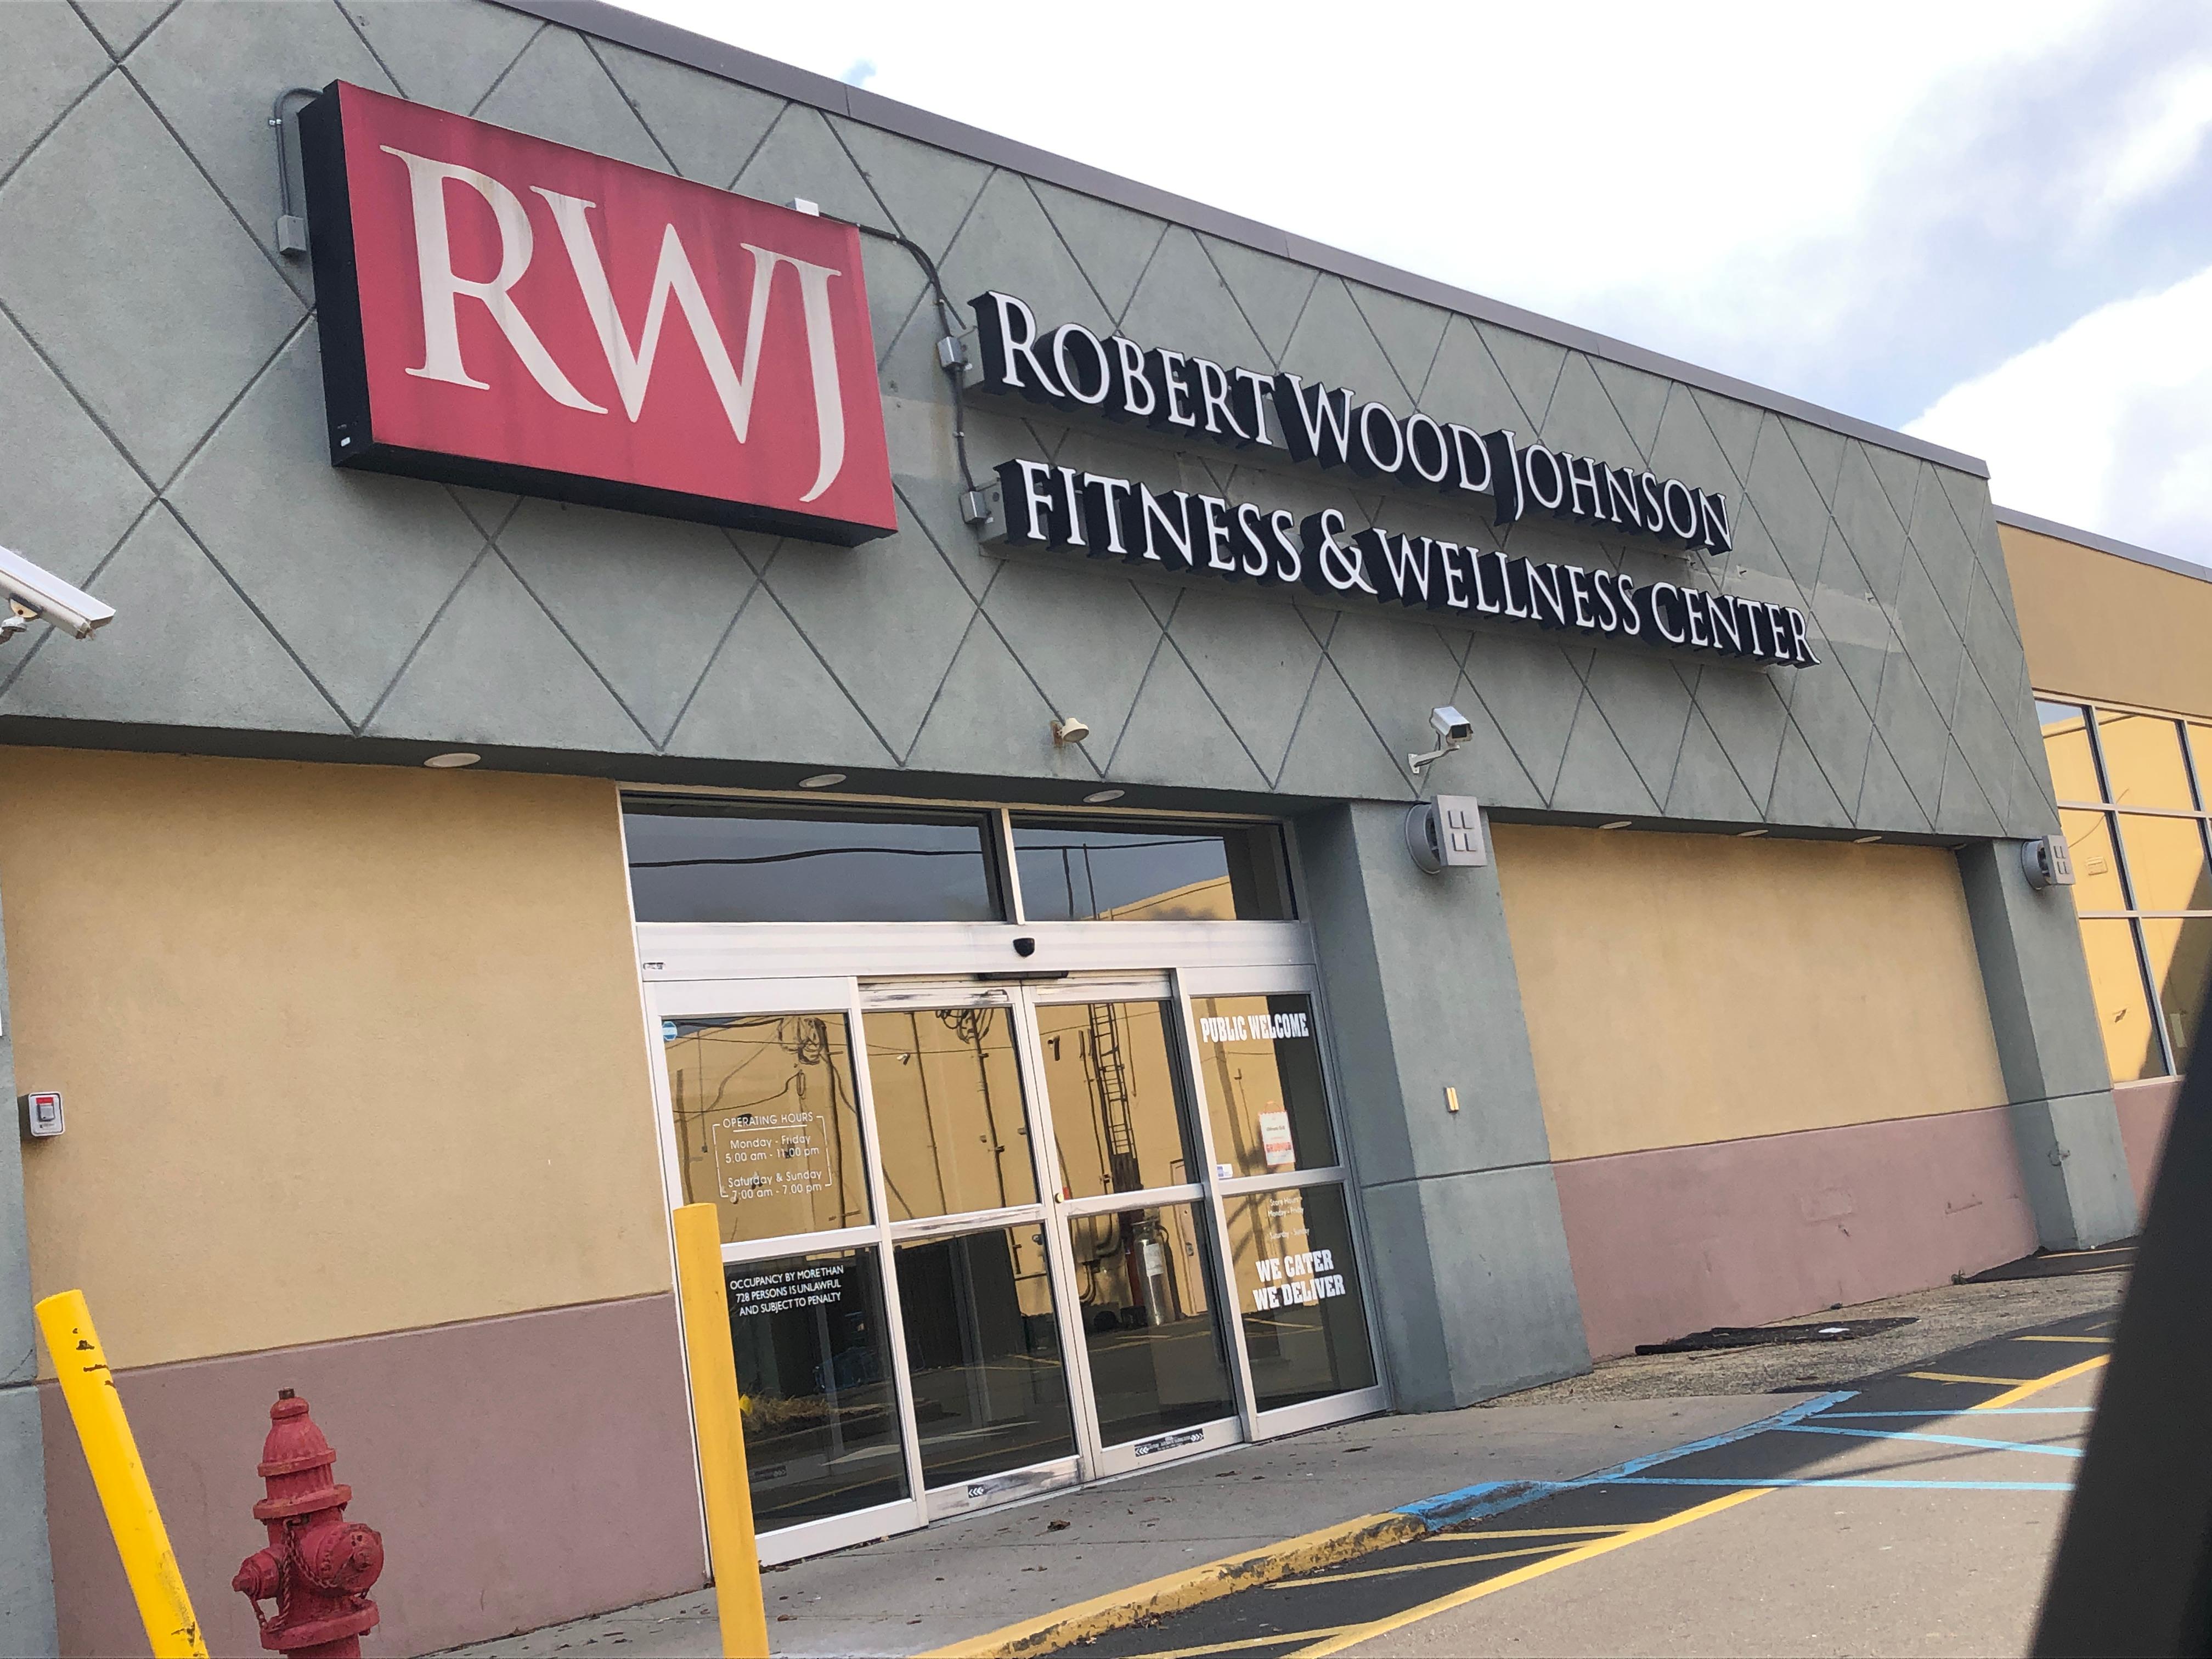 Robert Wood Johnson Fitness & Wellness Center at Old Bridge Gateway Shopping Center